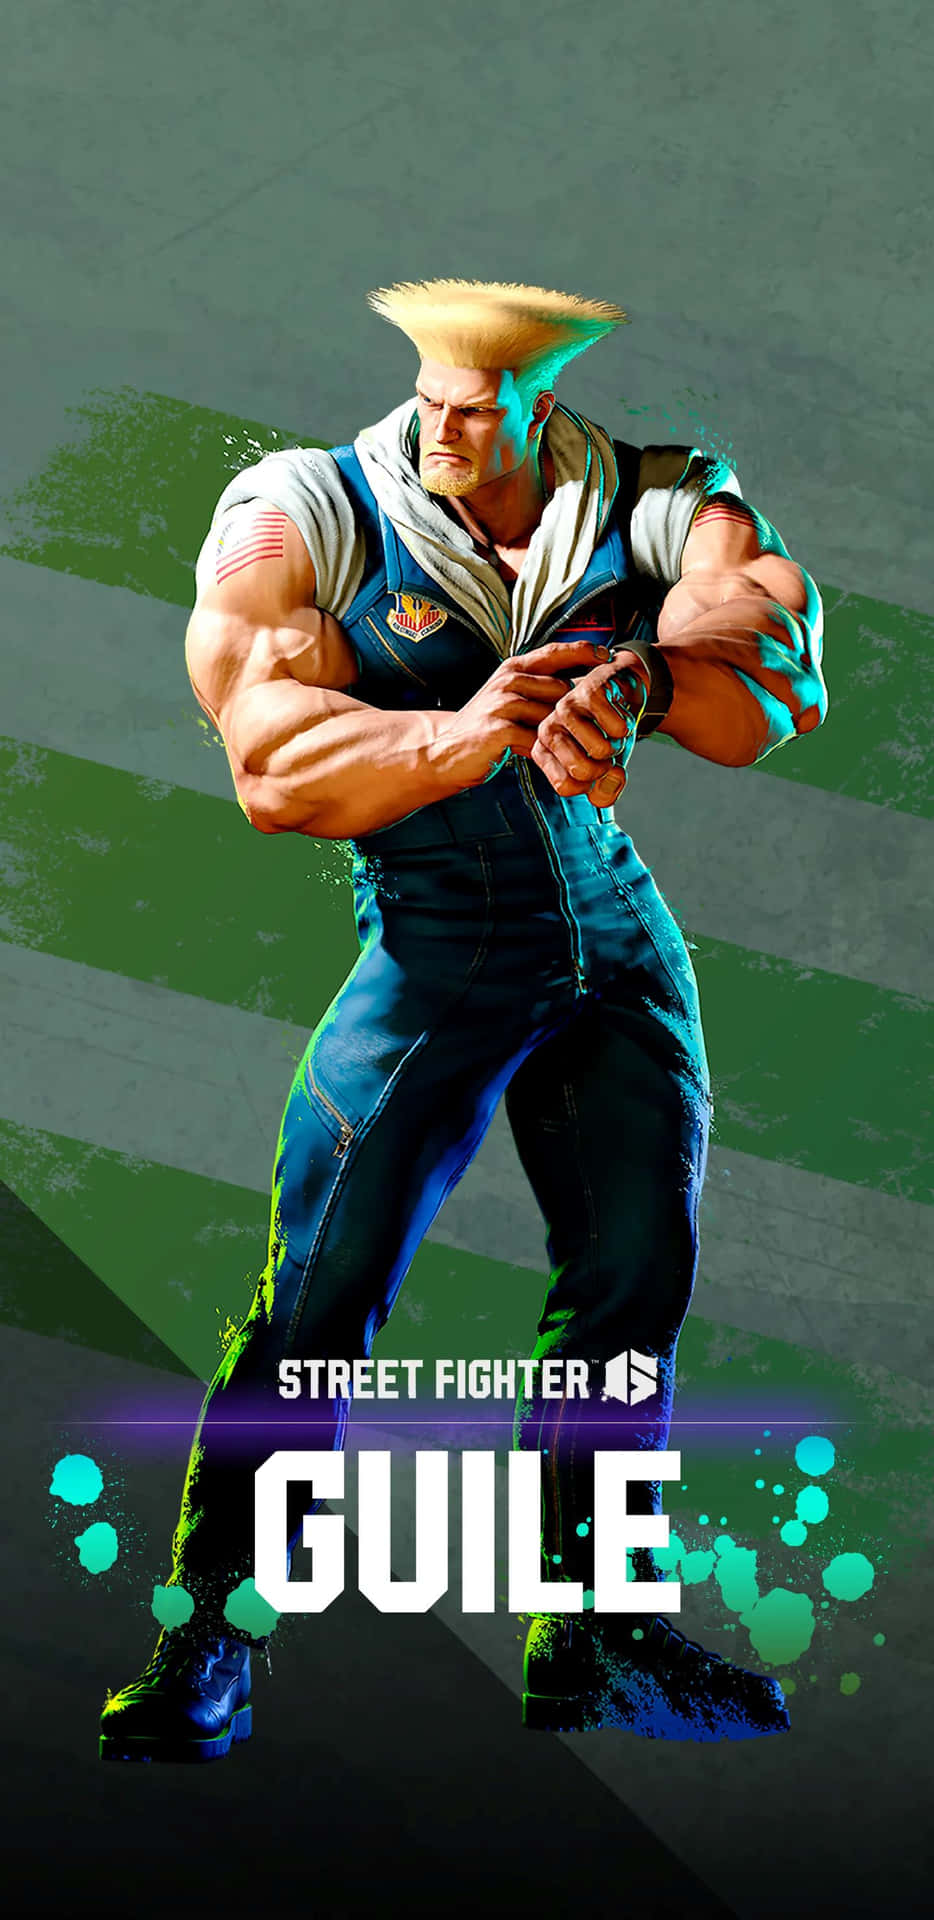 Street Fighter Guile Promotional Art Wallpaper